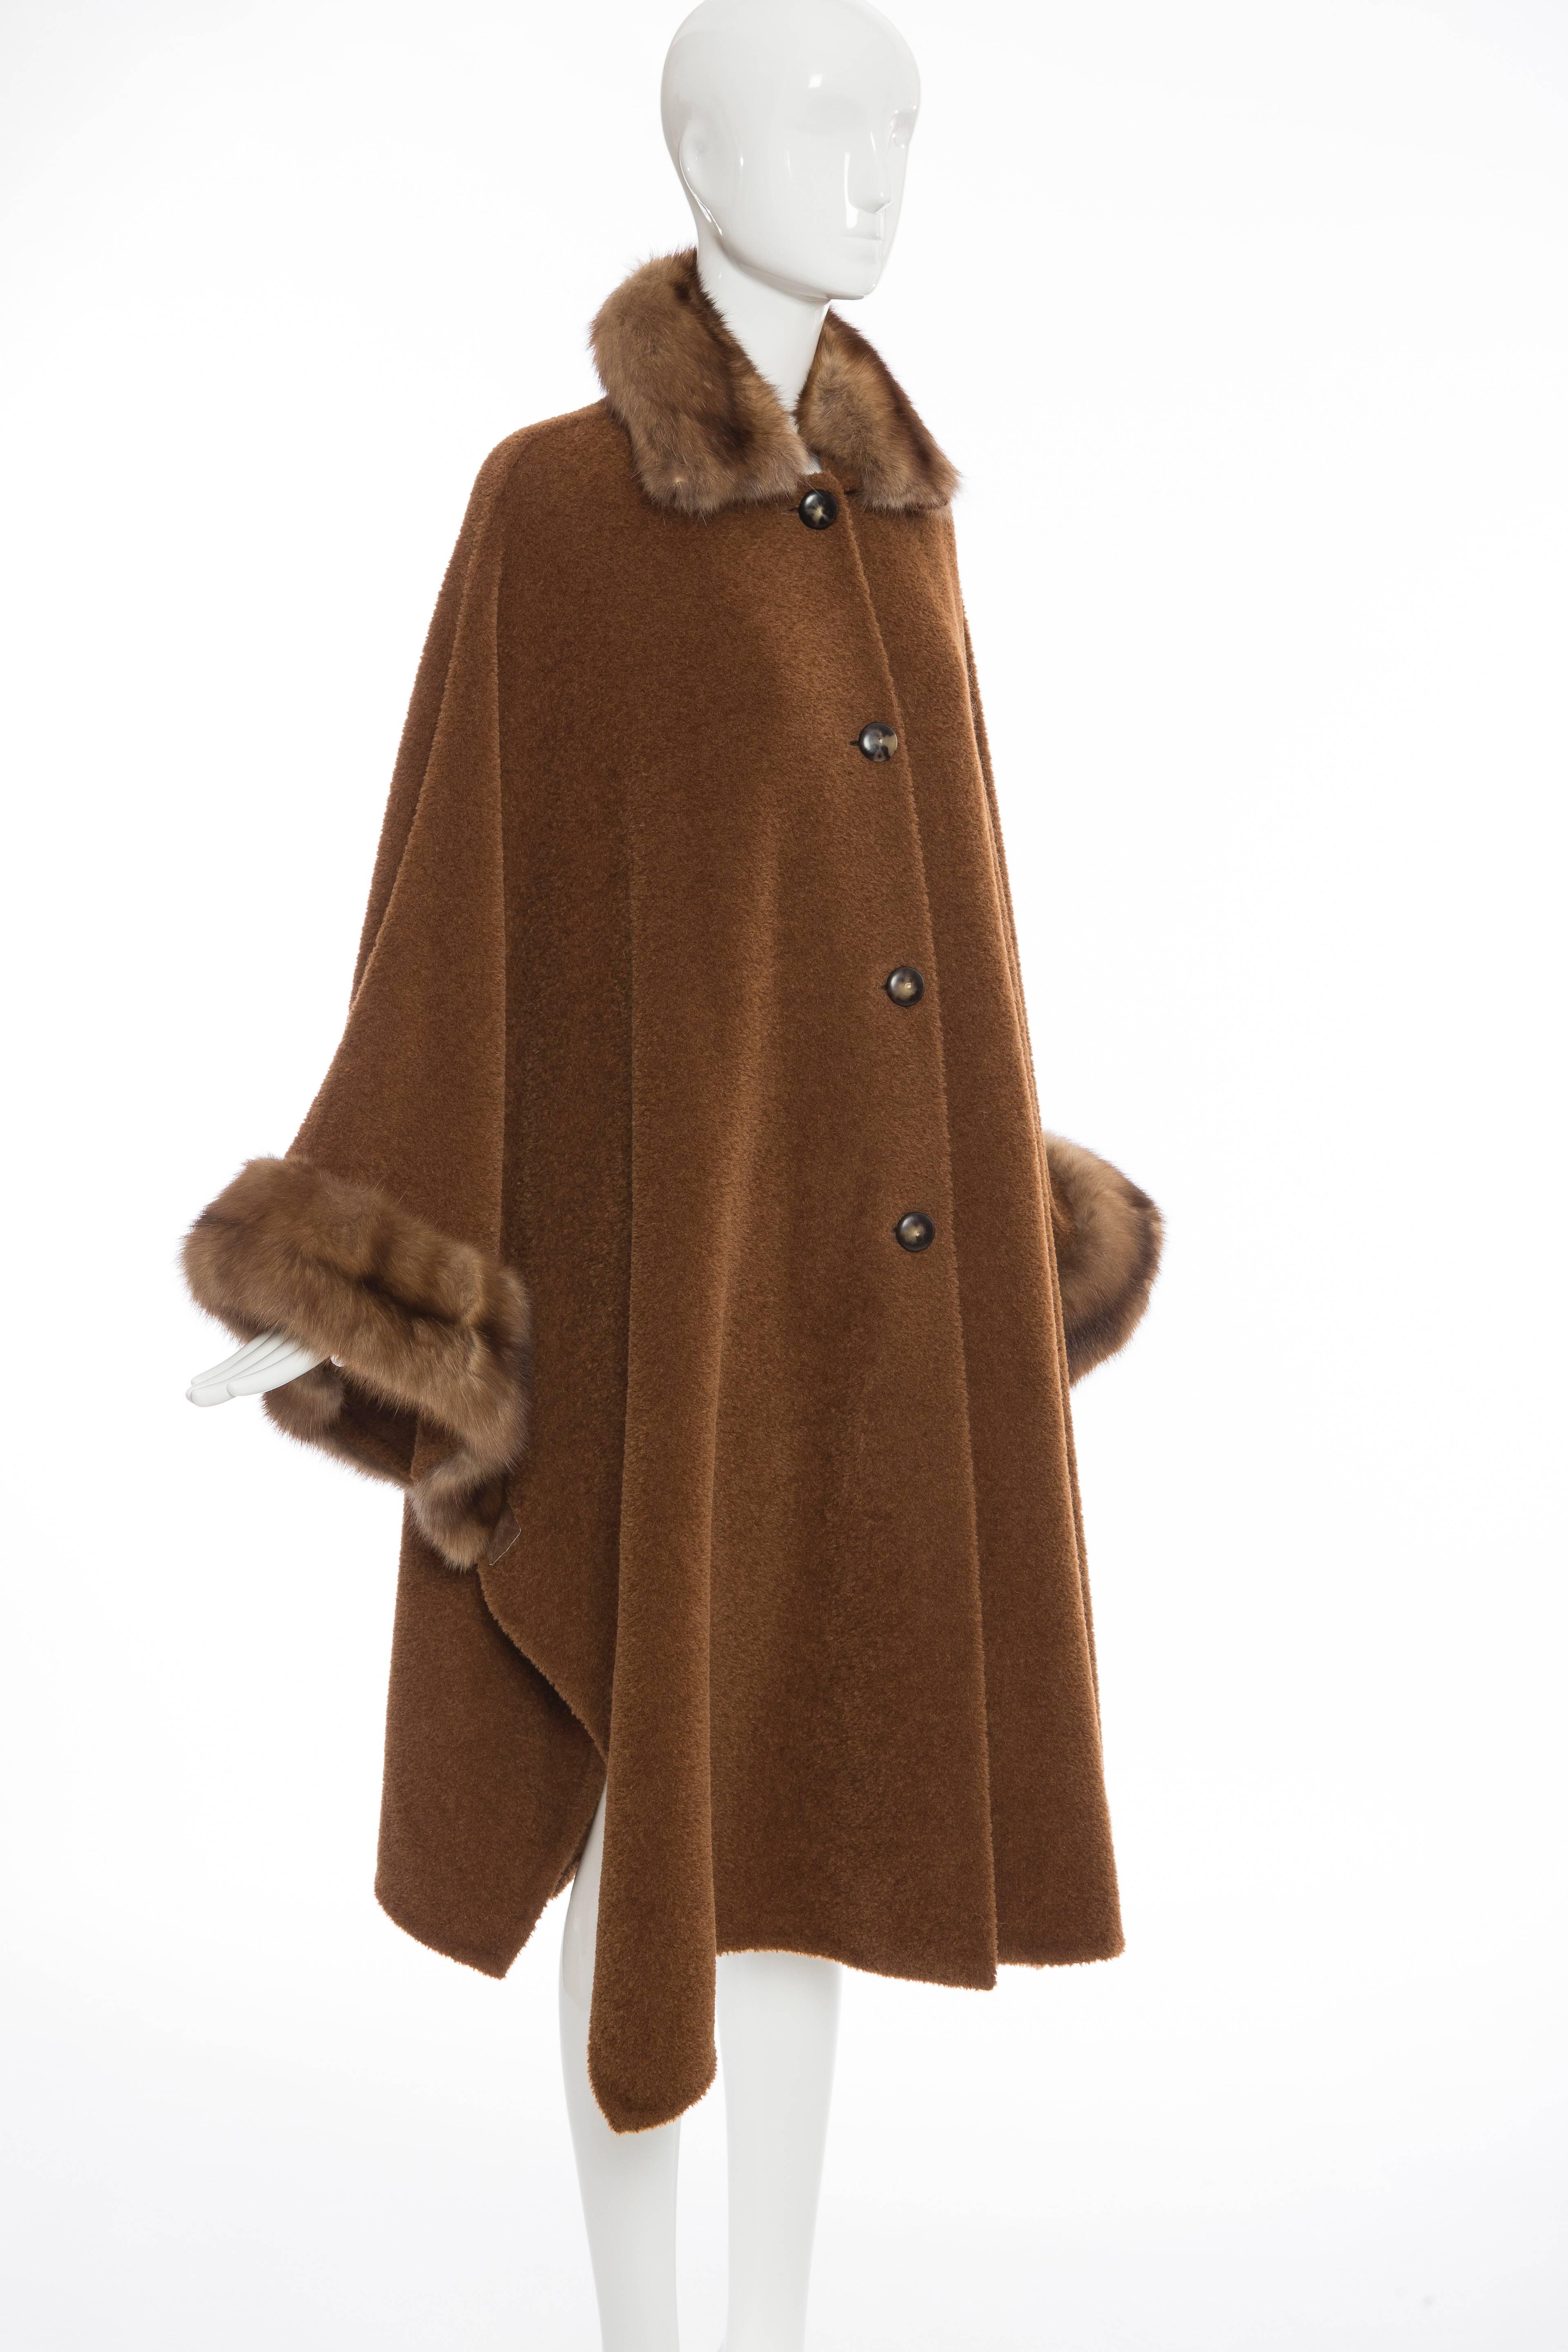 Brown Revillon Alpaca Button Front Cloak - Cape With Sable Trim, Late 20th Century